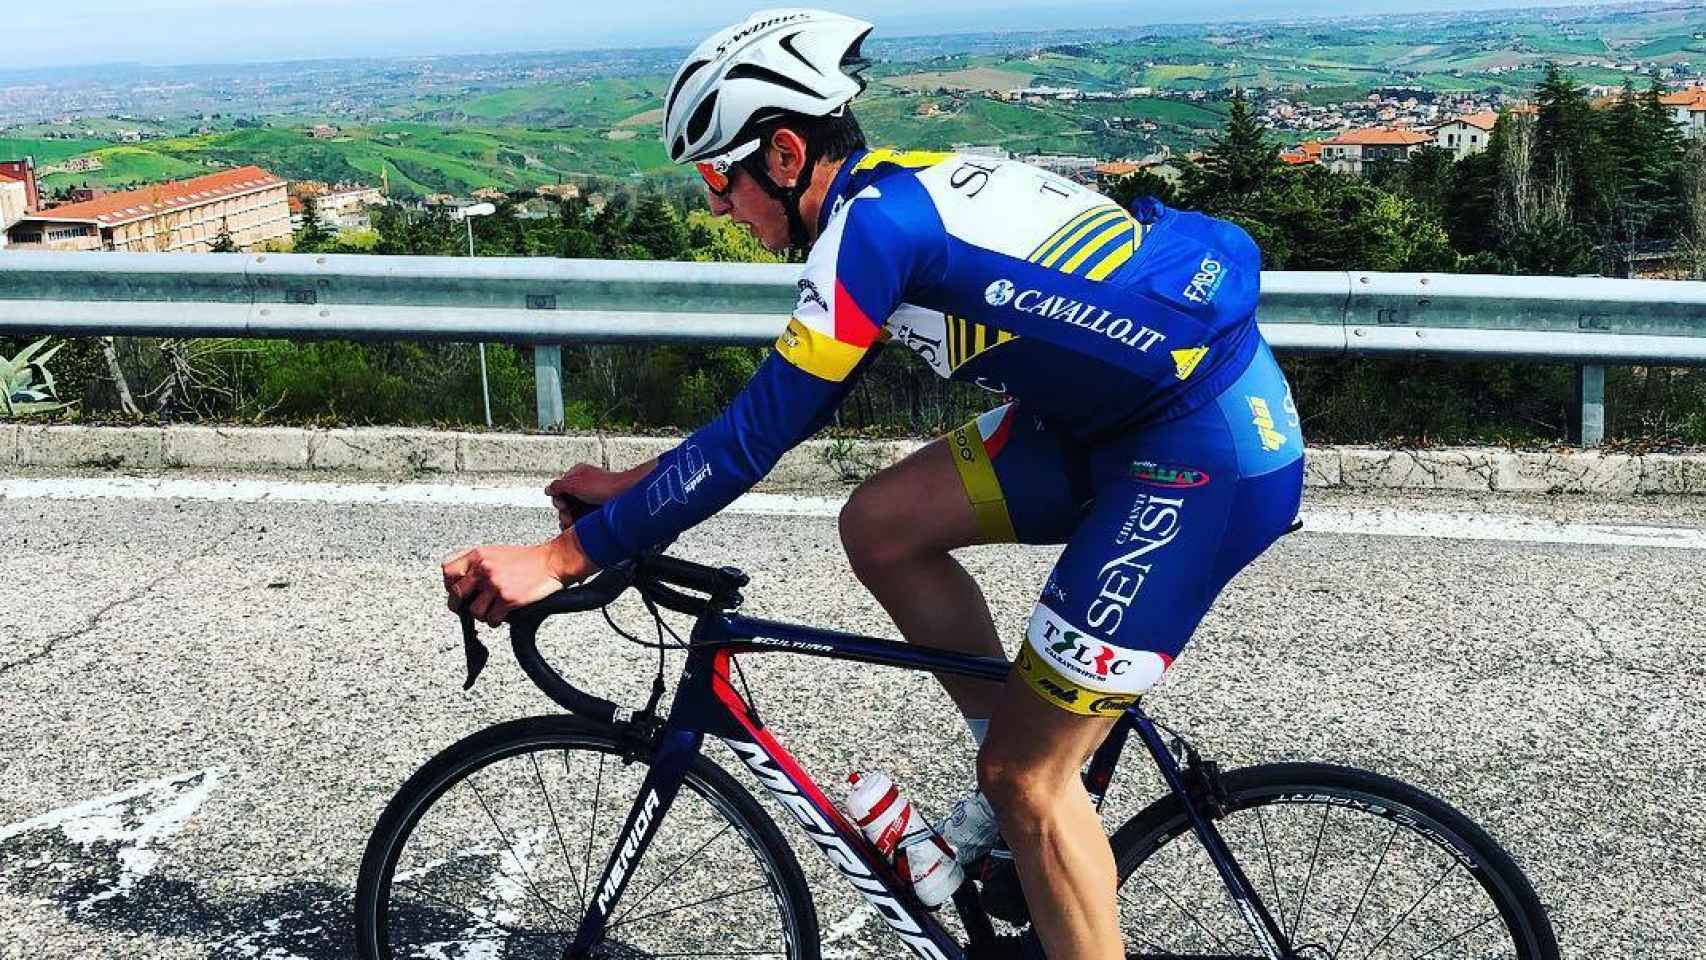 El ciclista italiano Michael Antonelli